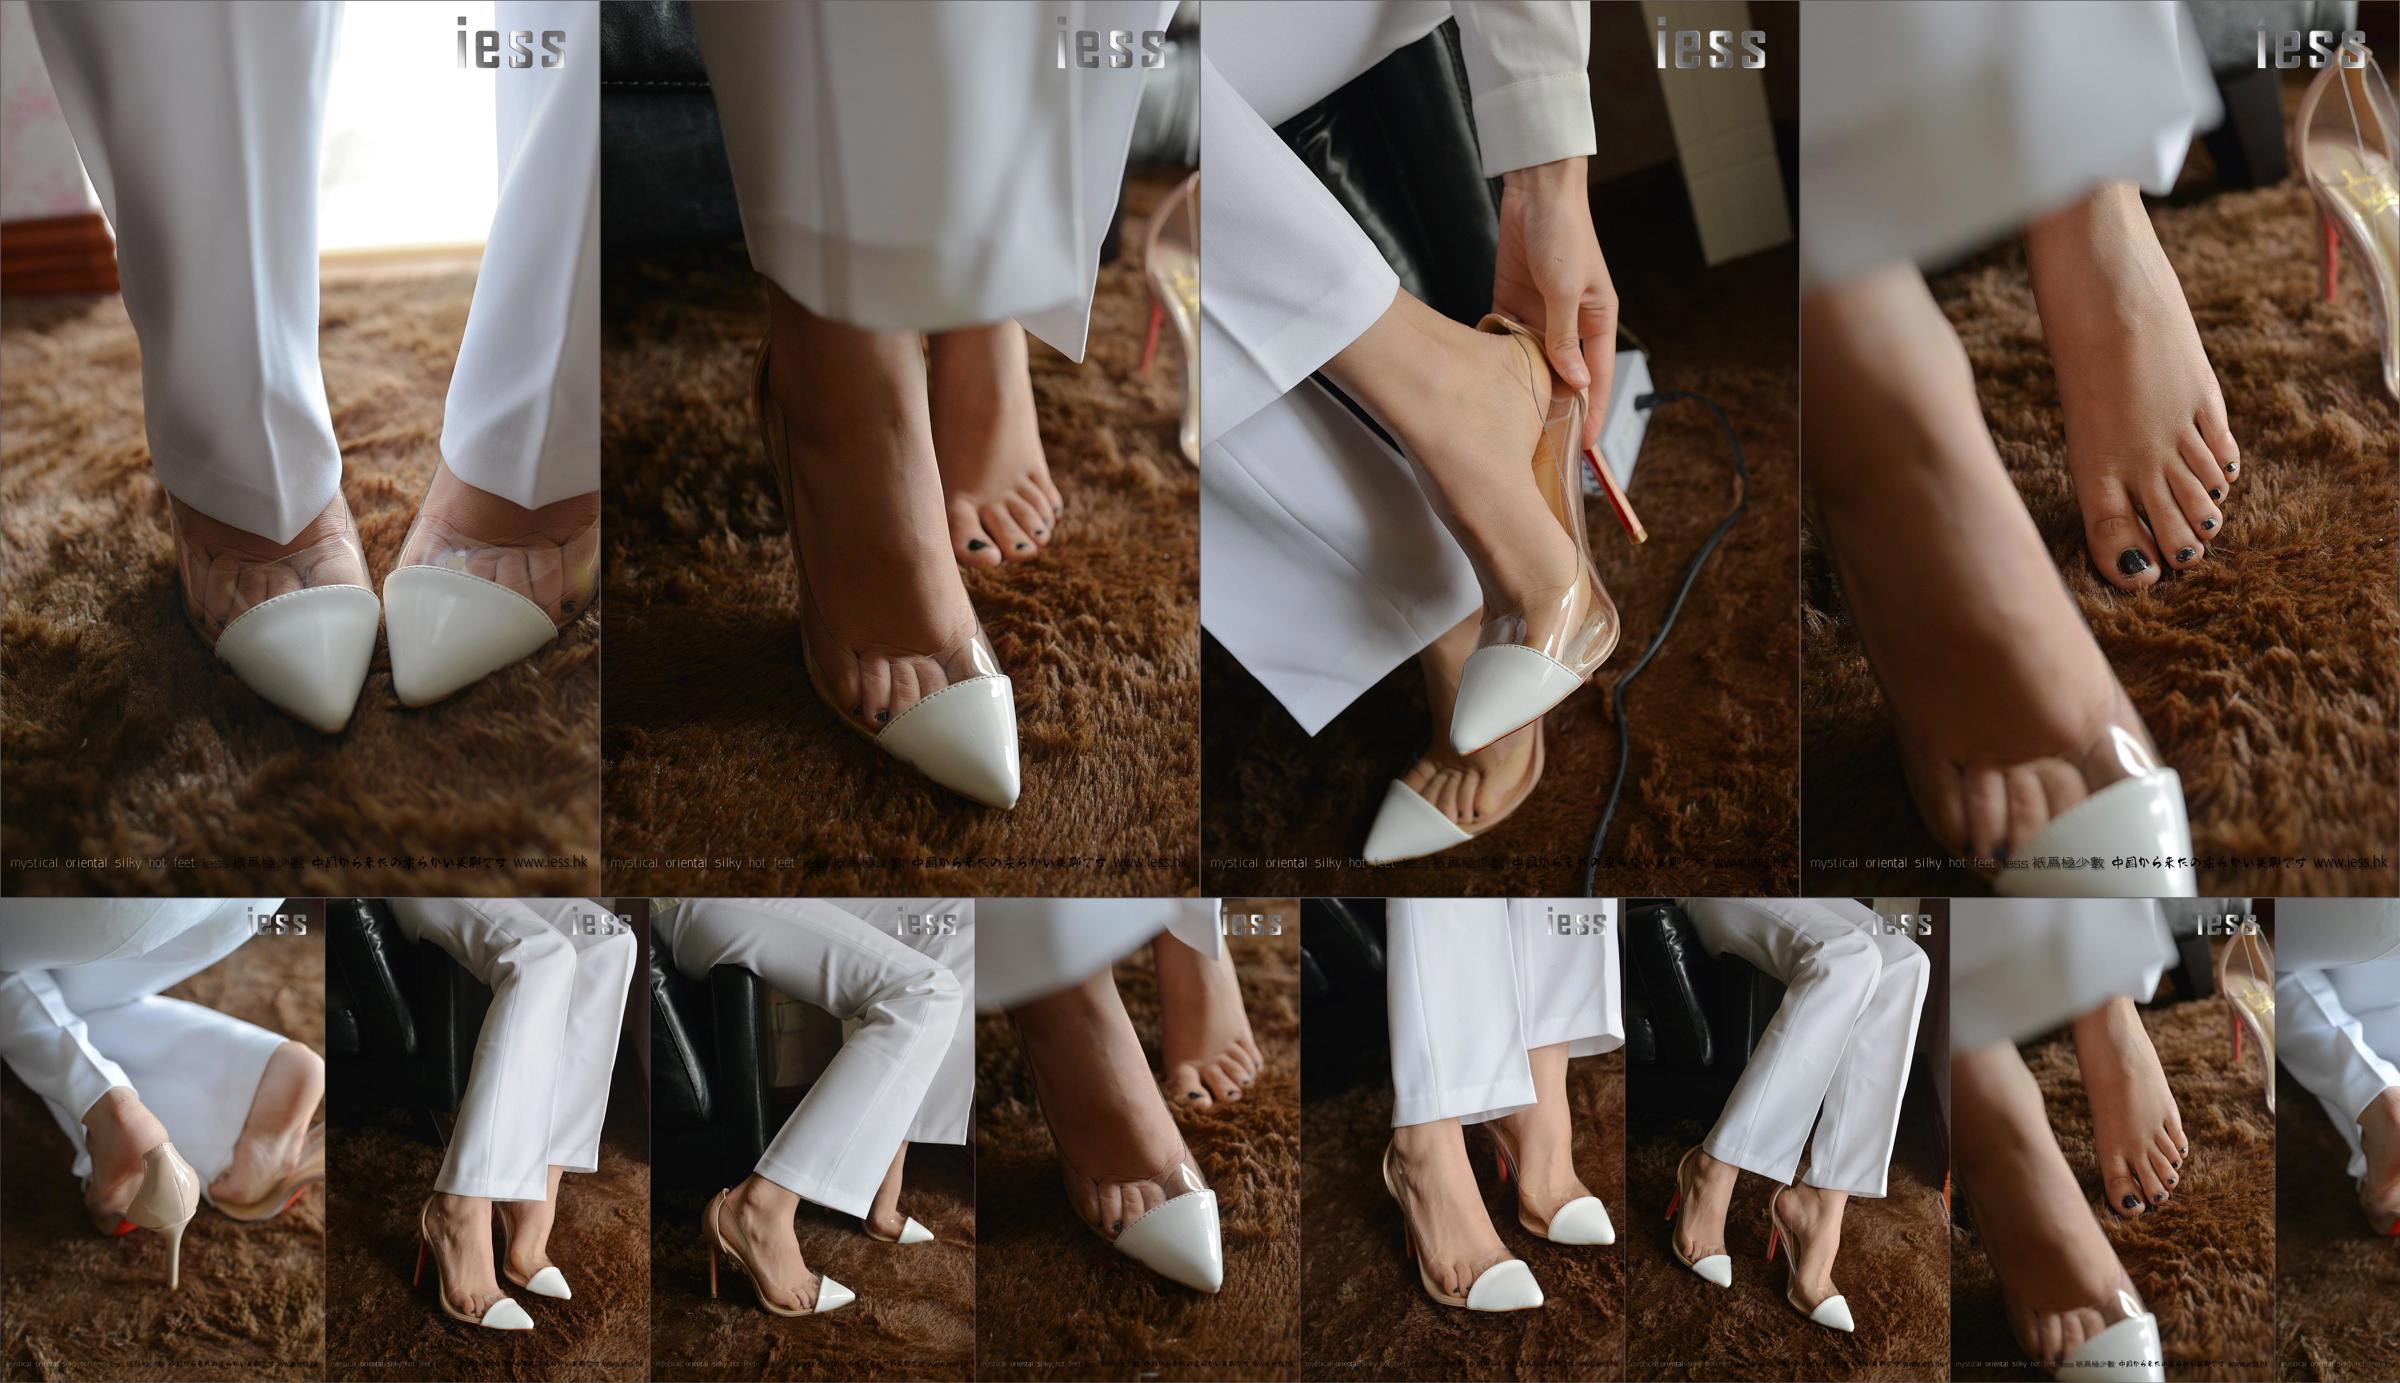 Silky Foot Bento 058 Suspense "Collection-Bare Foot High Heels" [IESS Wei Si Fun Xiang] No.e7514d Halaman 50